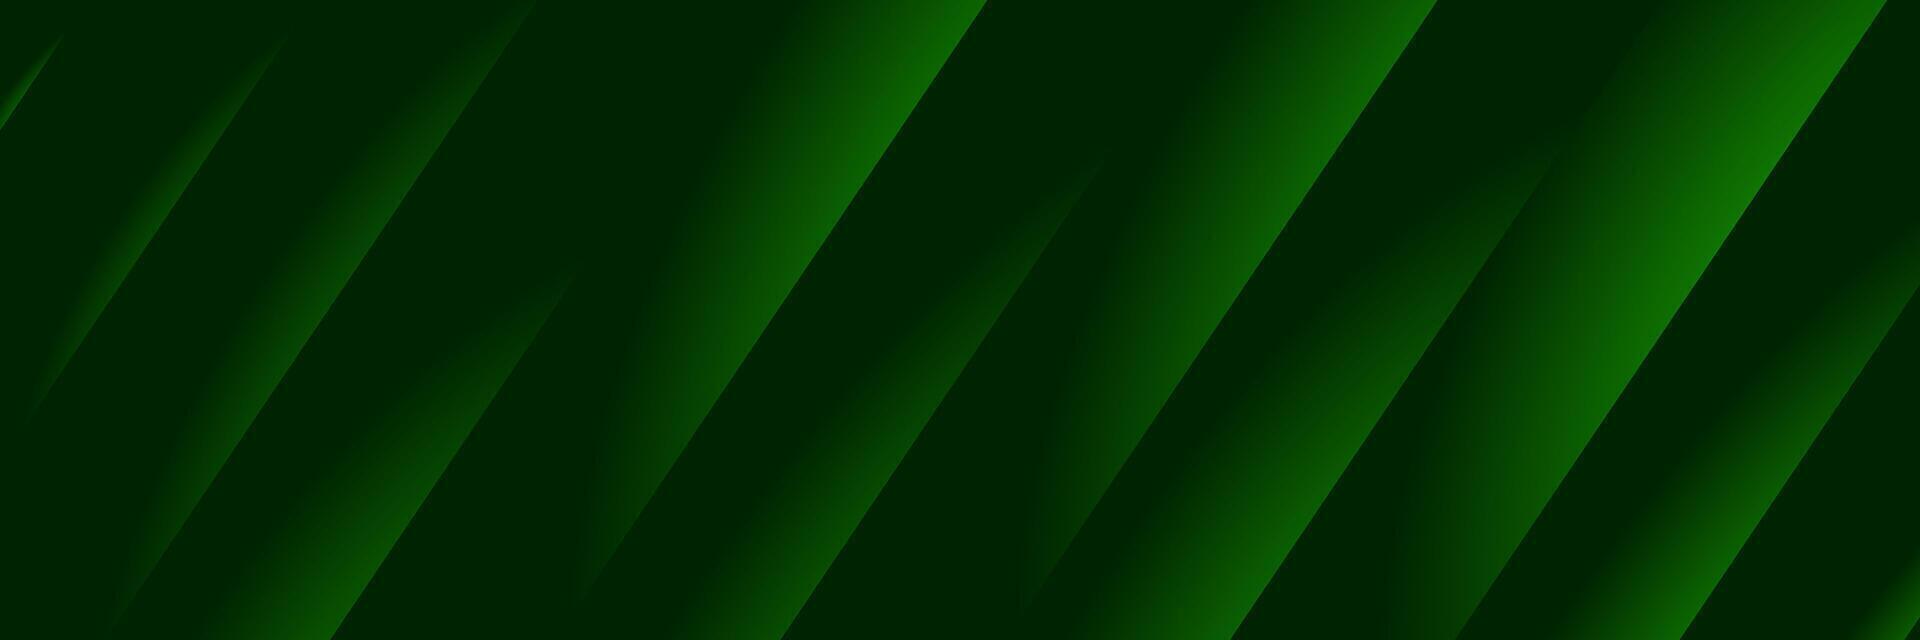 abstract dark green elegant corporate background vector